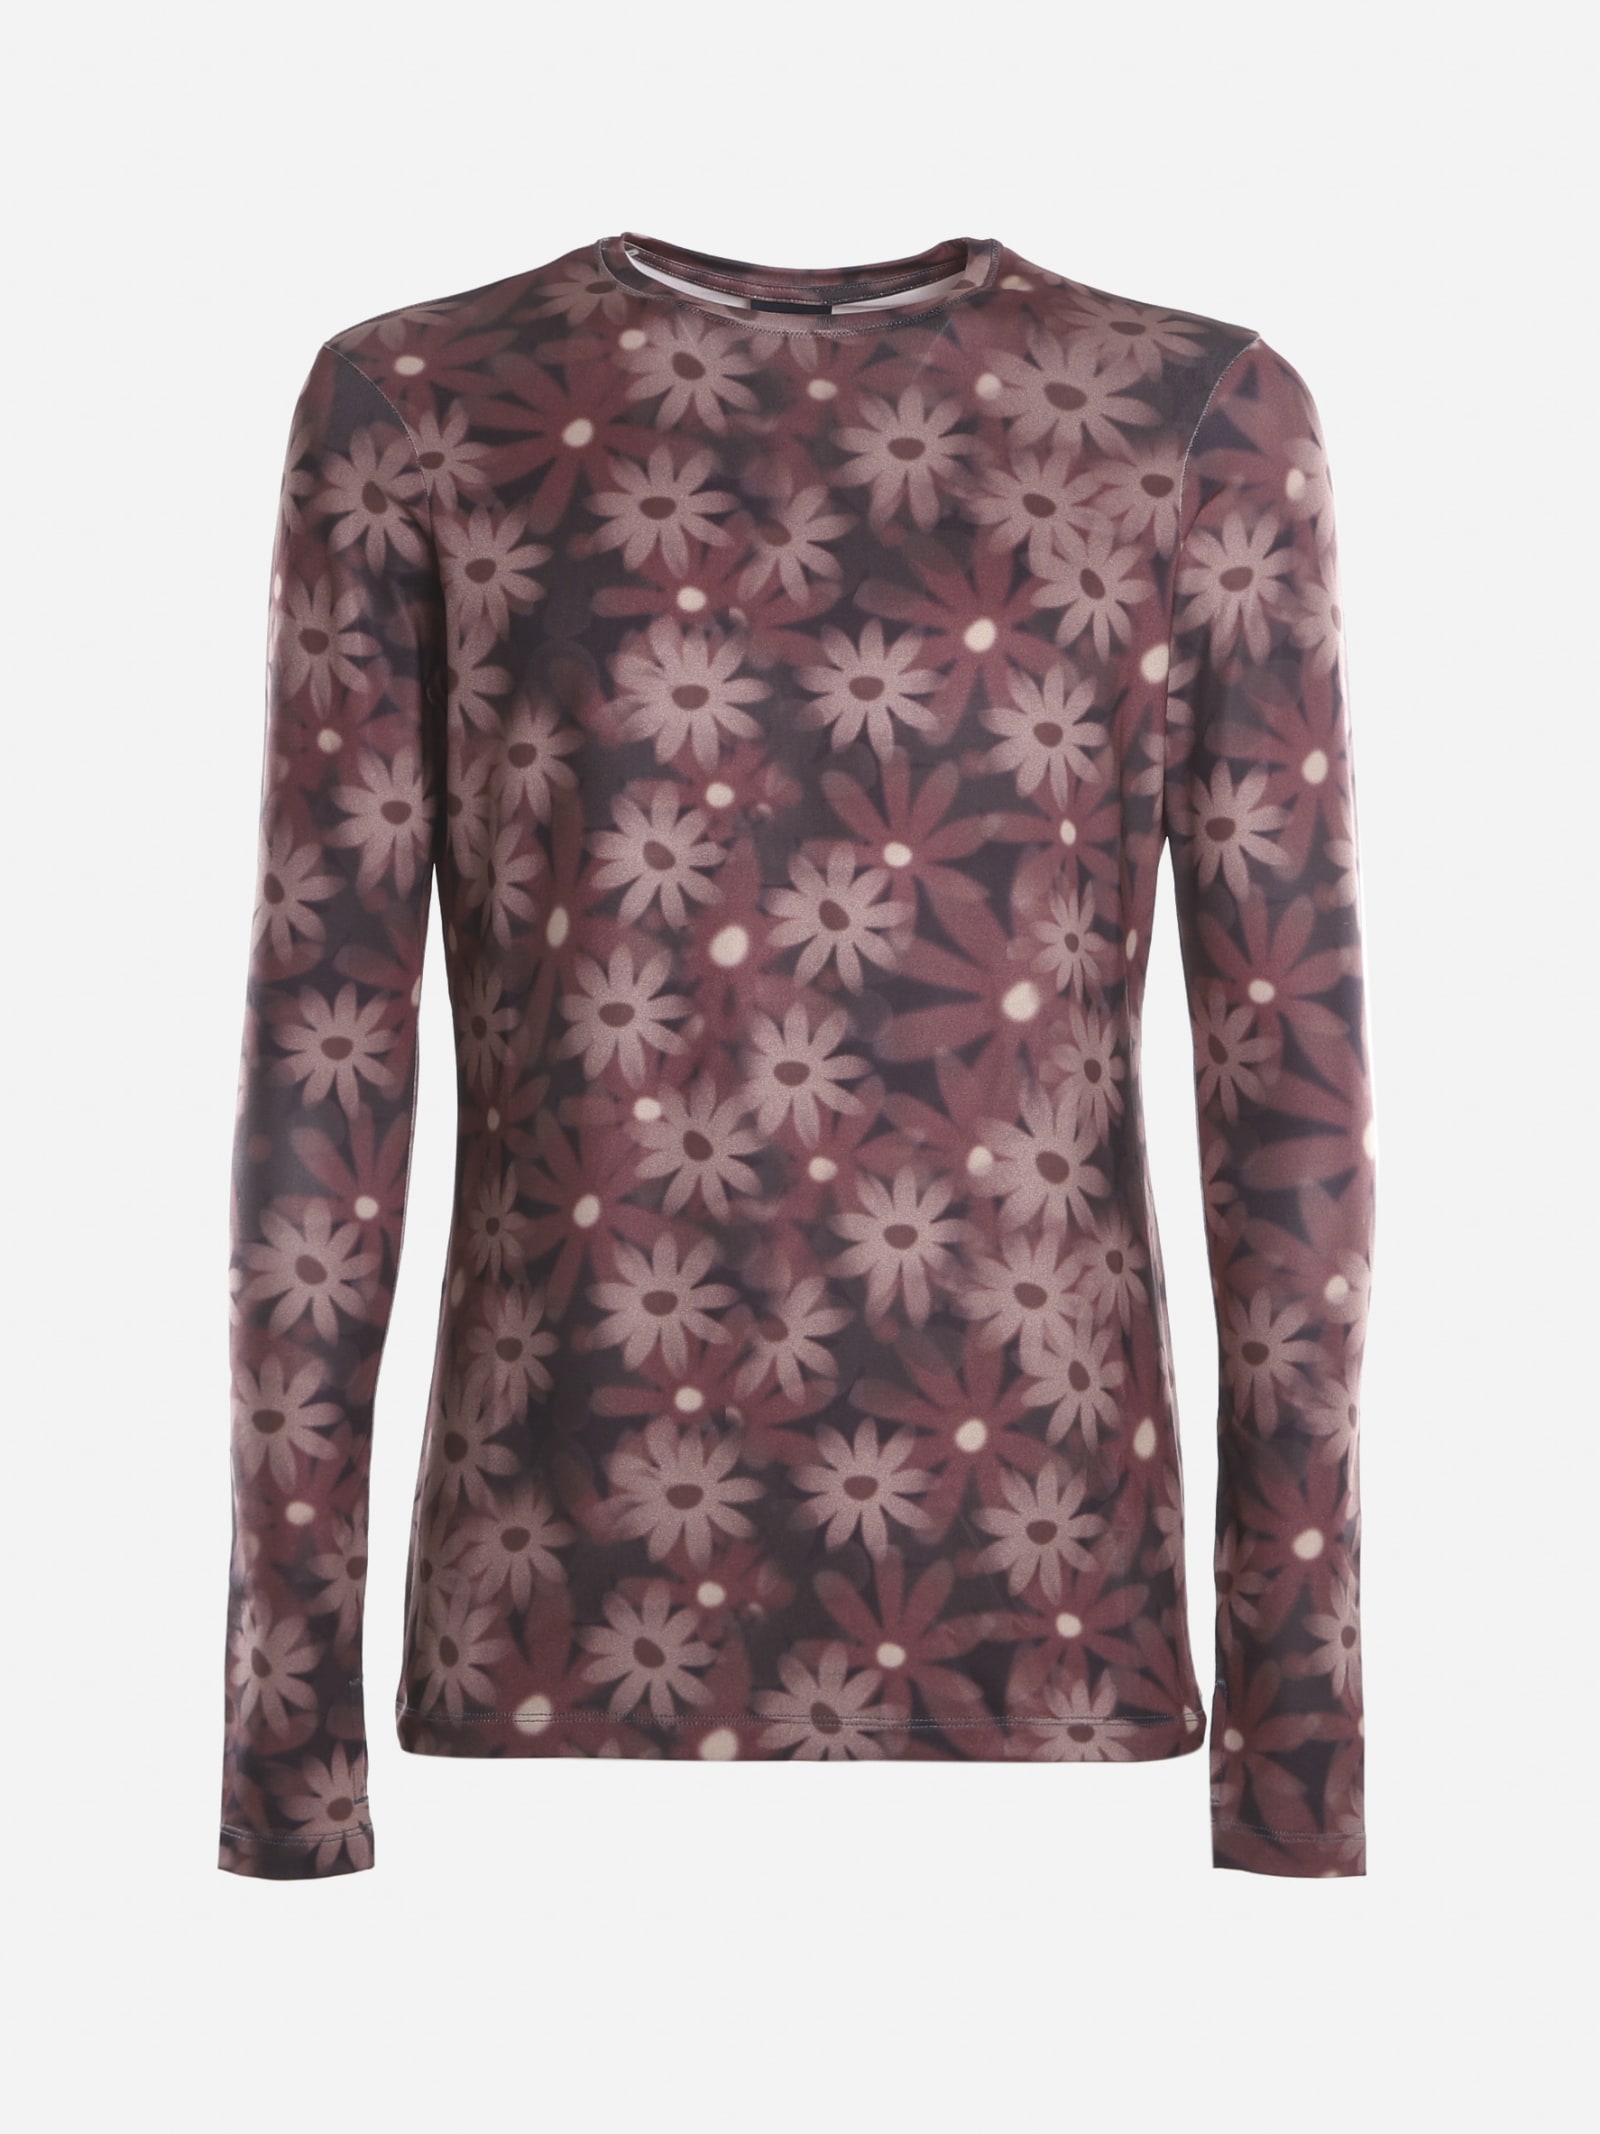 Jacquemus La Second Peau Fleur Sweater With All-over Floral Print